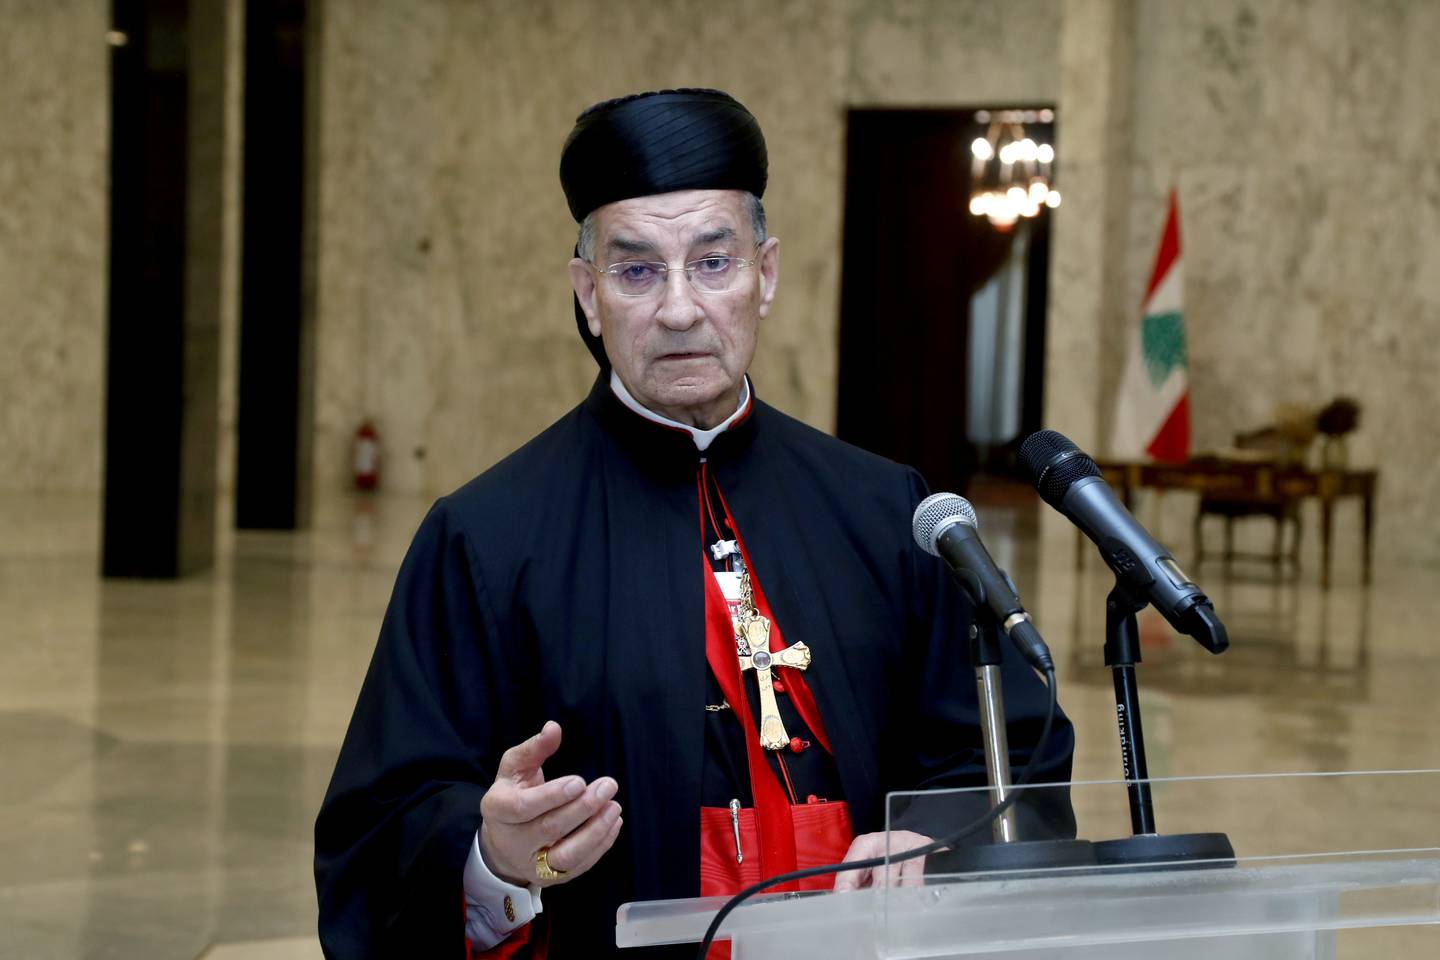 Maronite Patriarch Bechara Al Rai has been pushing for Lebanese neutrality. Reuters